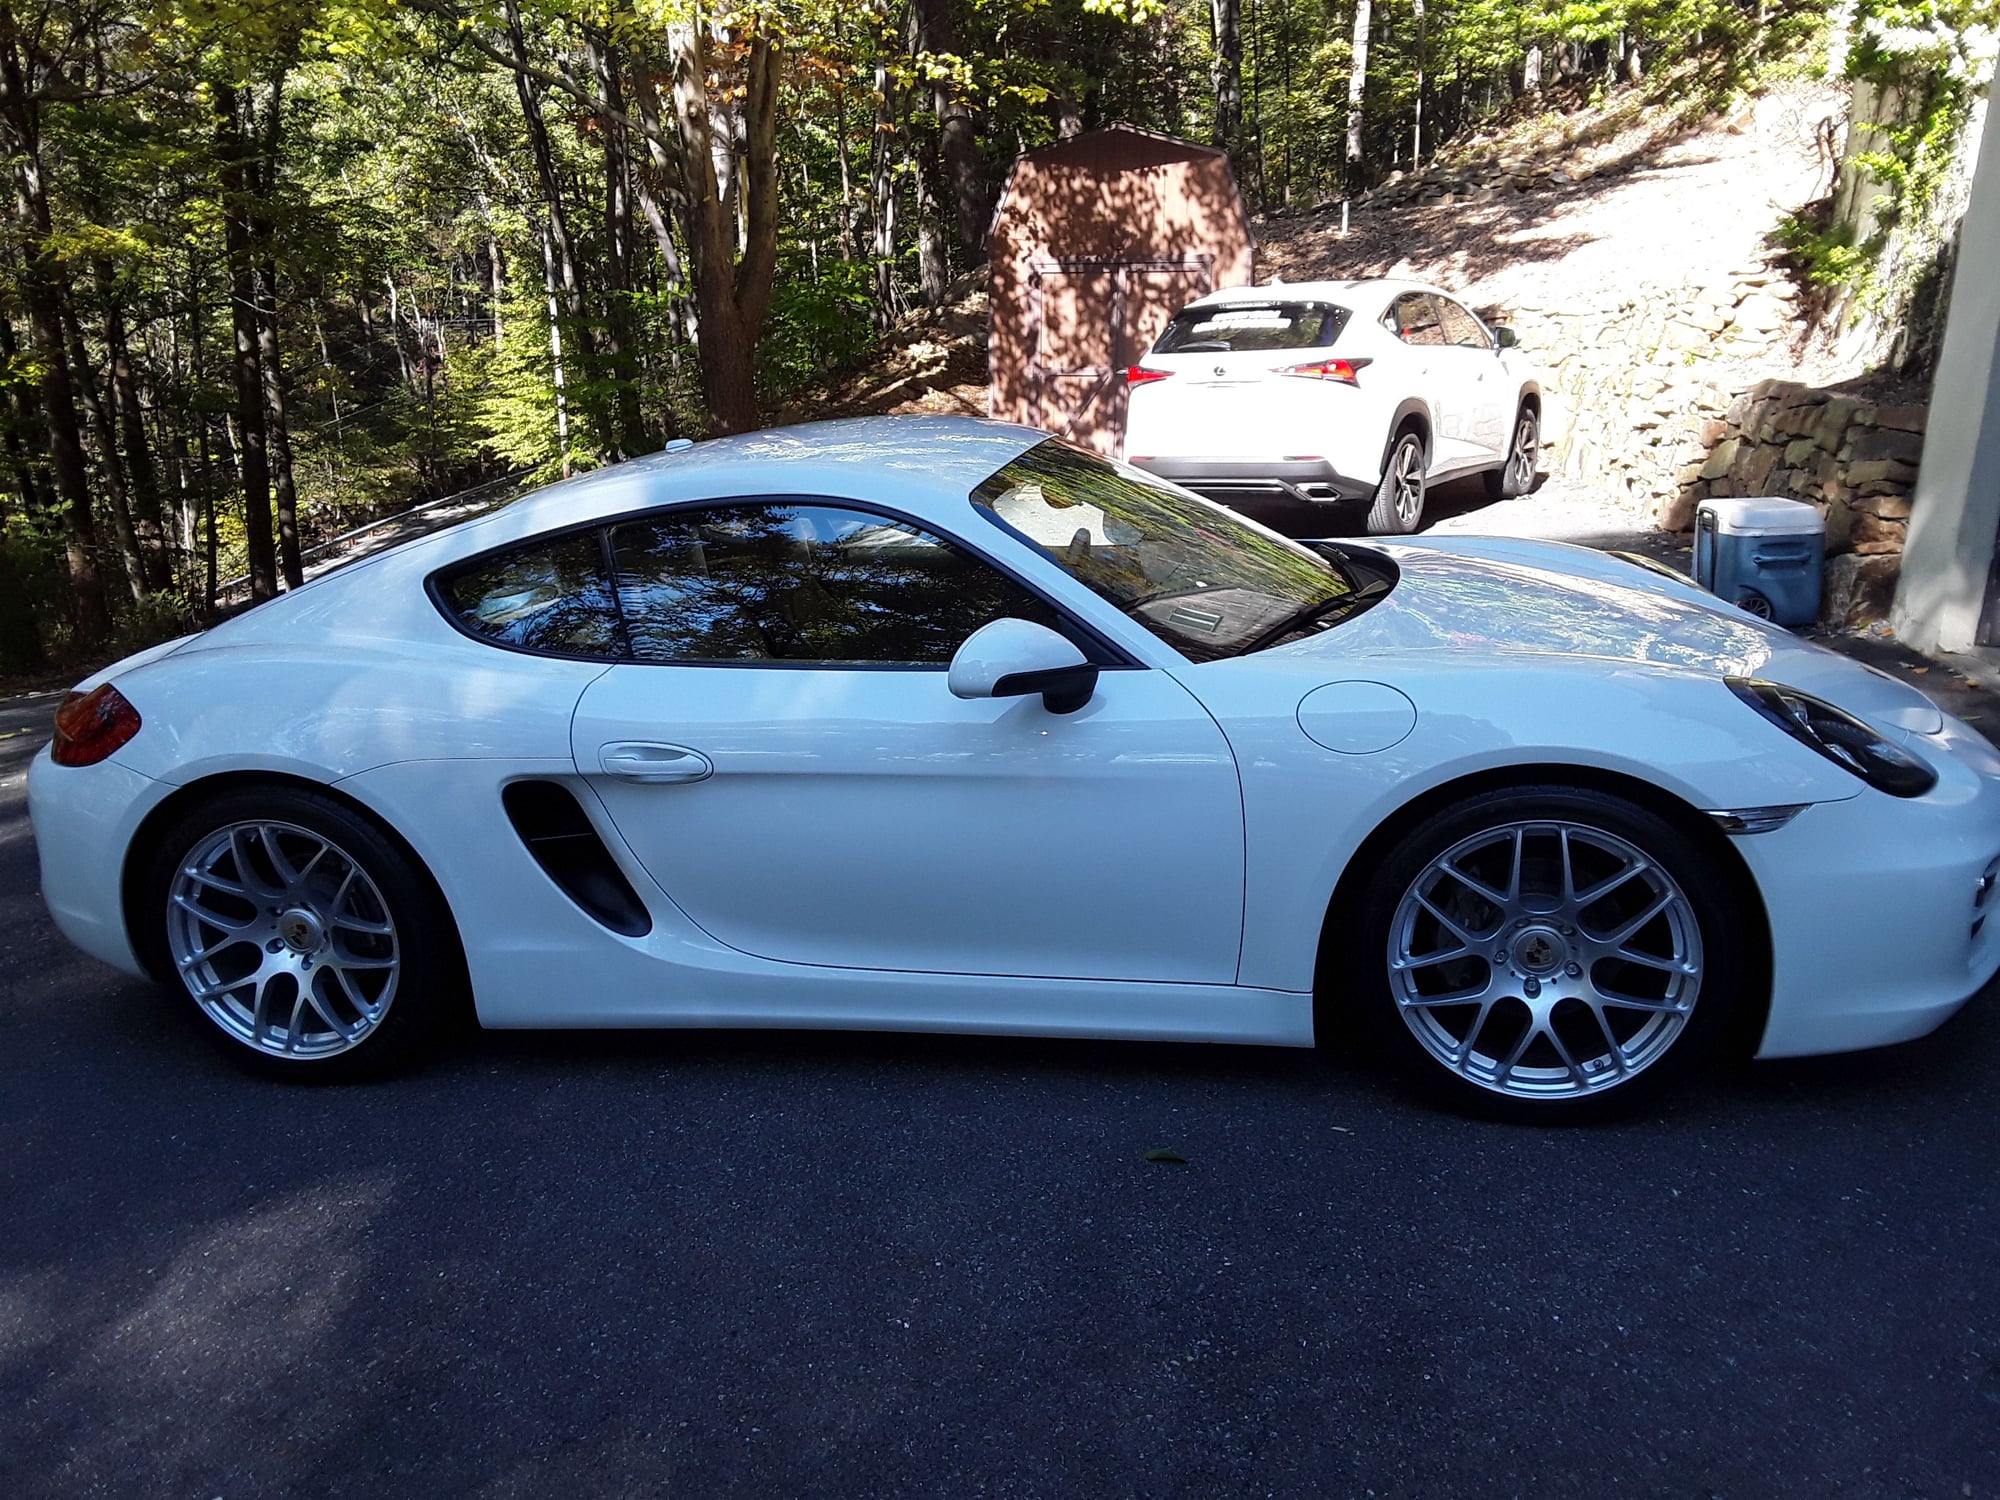 2014 Porsche Cayman - 2014 Porsche 981 Cayman 2.7 - VIN# WP0AA2A88EK170409 - Used - VIN WP0AA2A88EK170409 - 6 cyl - 2WD - Manual - Coupe - White - Franklin Twp, NJ 08808, United States